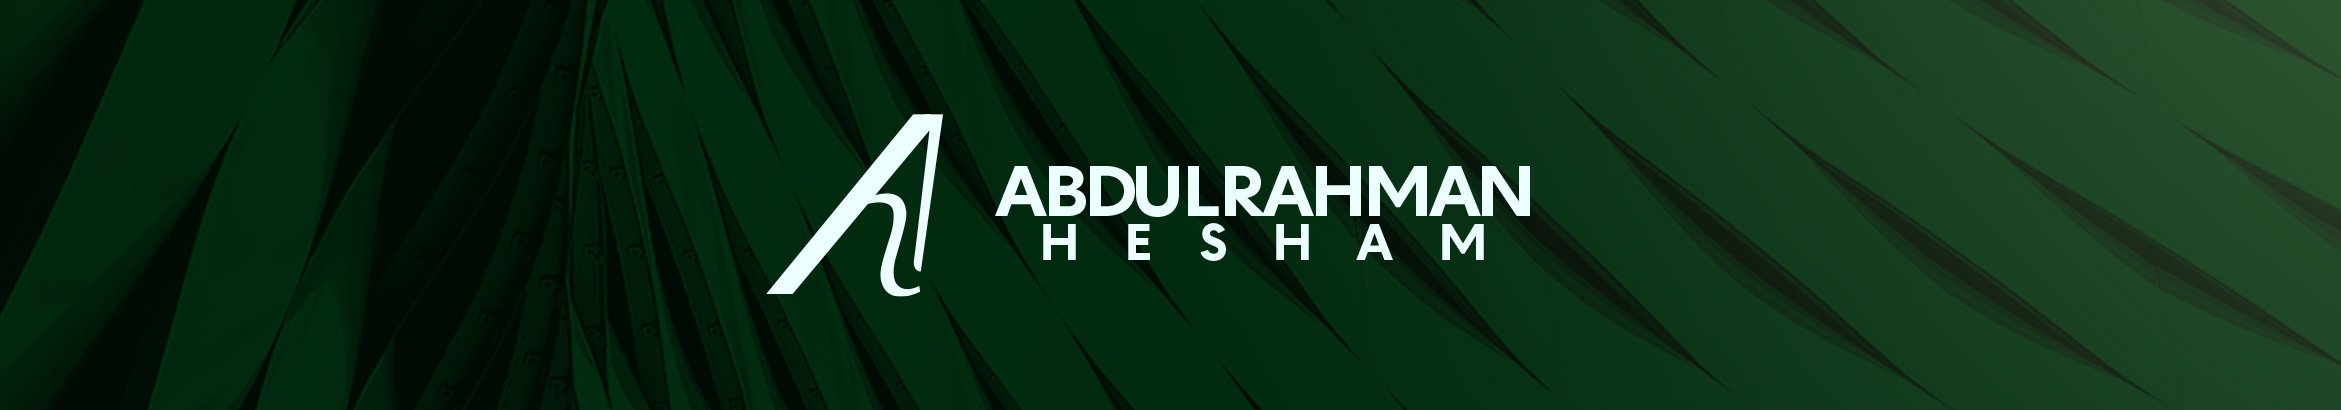 Abdulrahman Hesham's profile banner